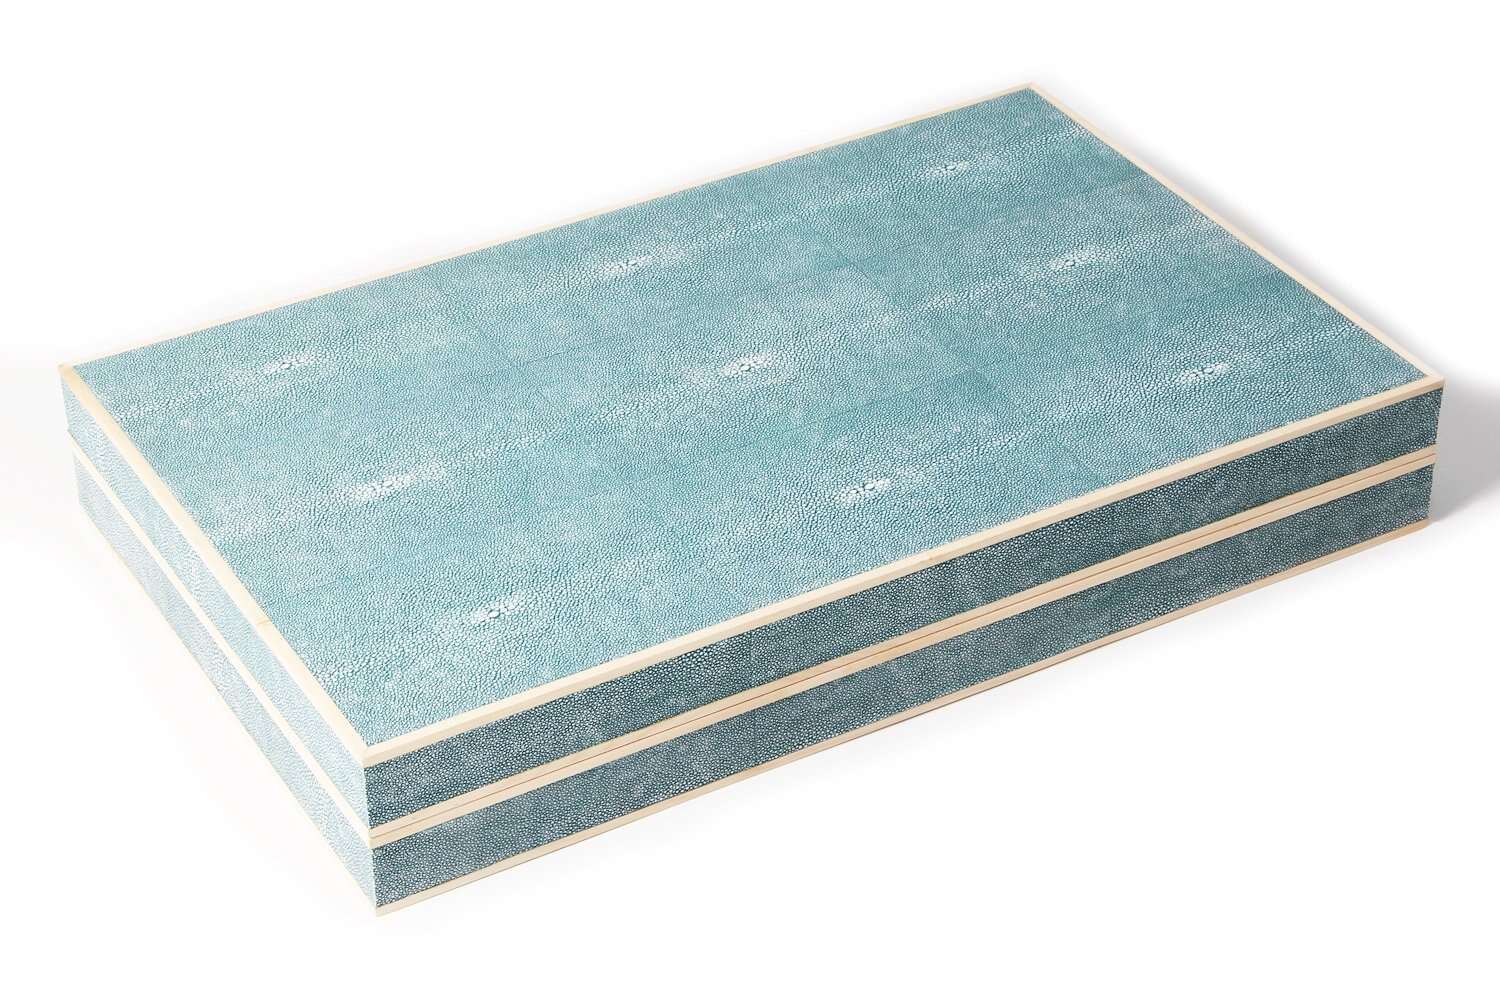 Luxury backgammon board teal shagreen bakgammon board